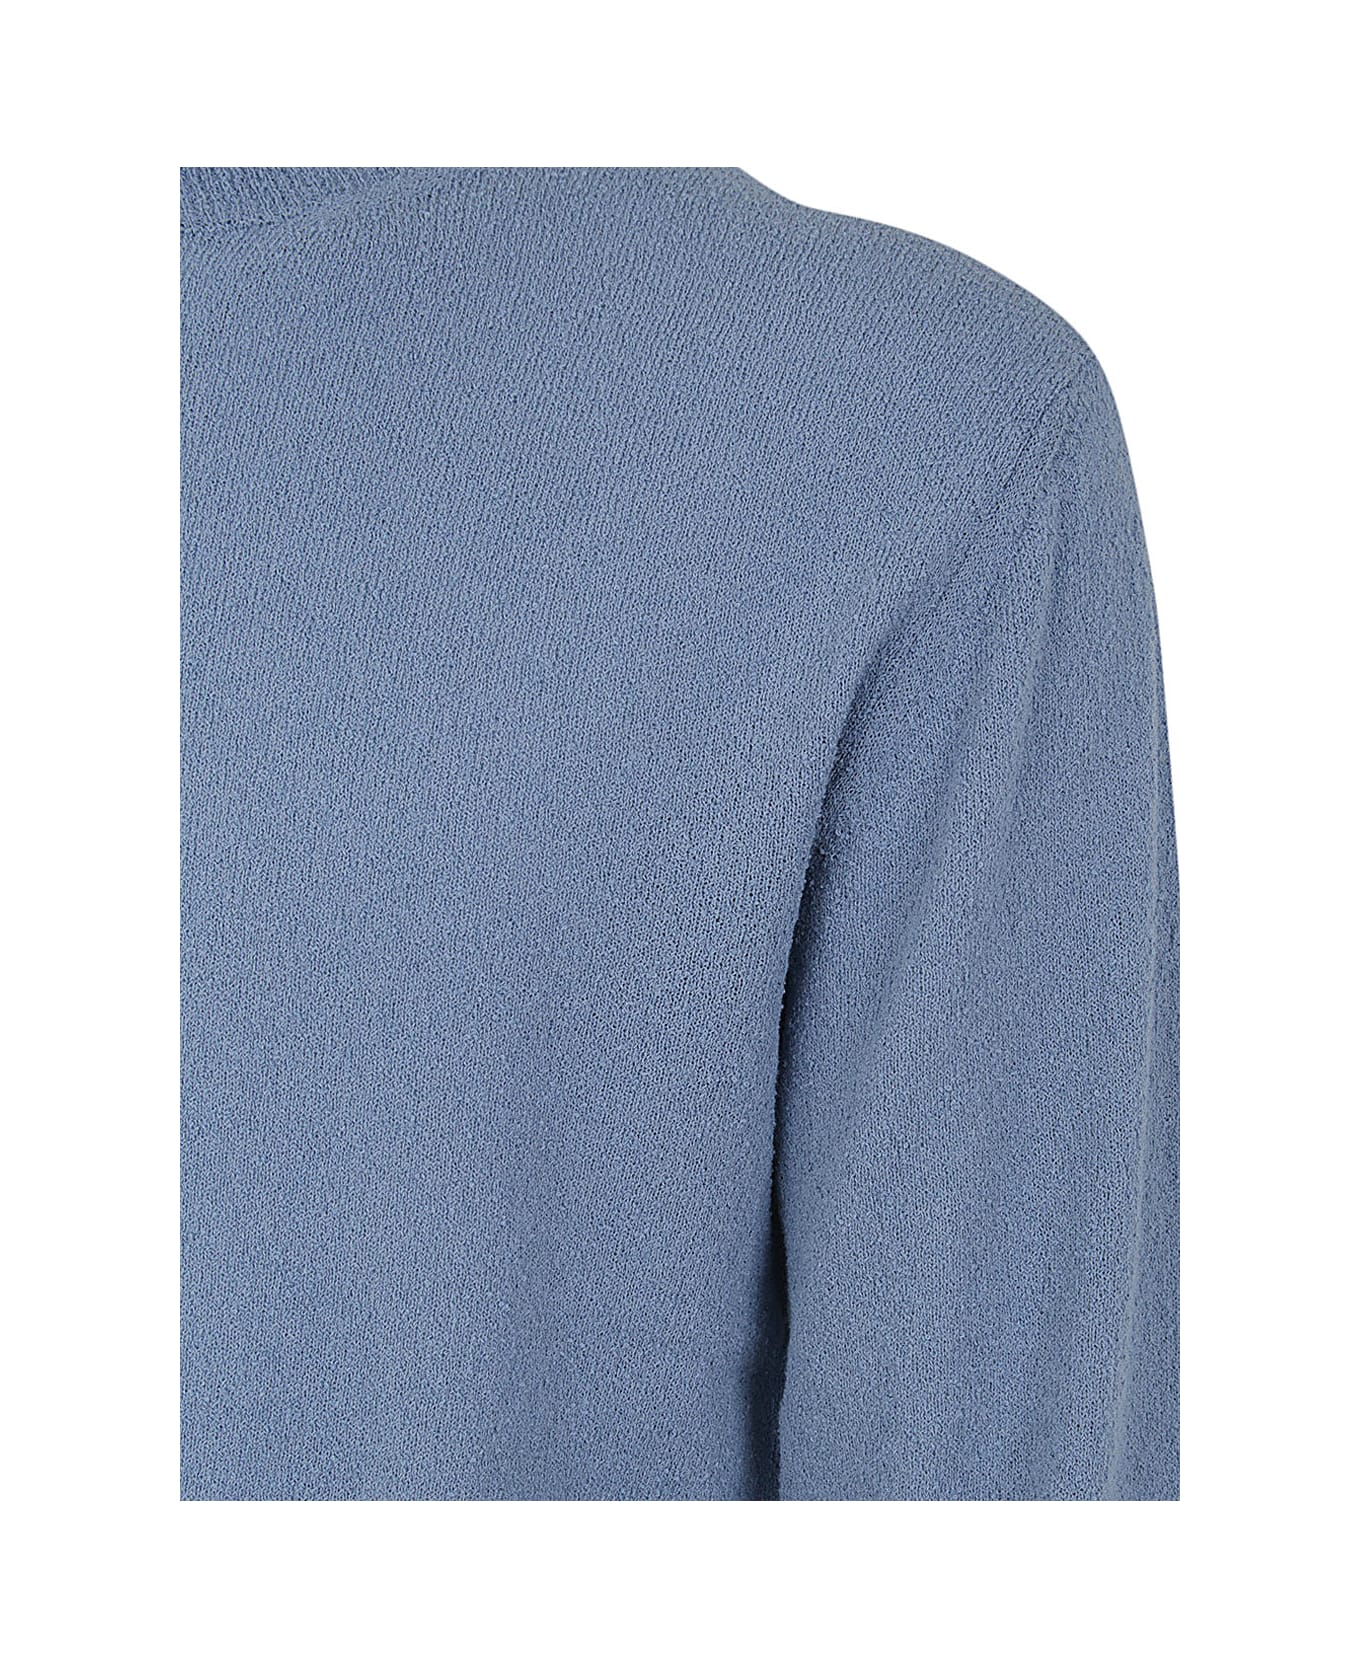 Drumohr Sweater - Light Blue